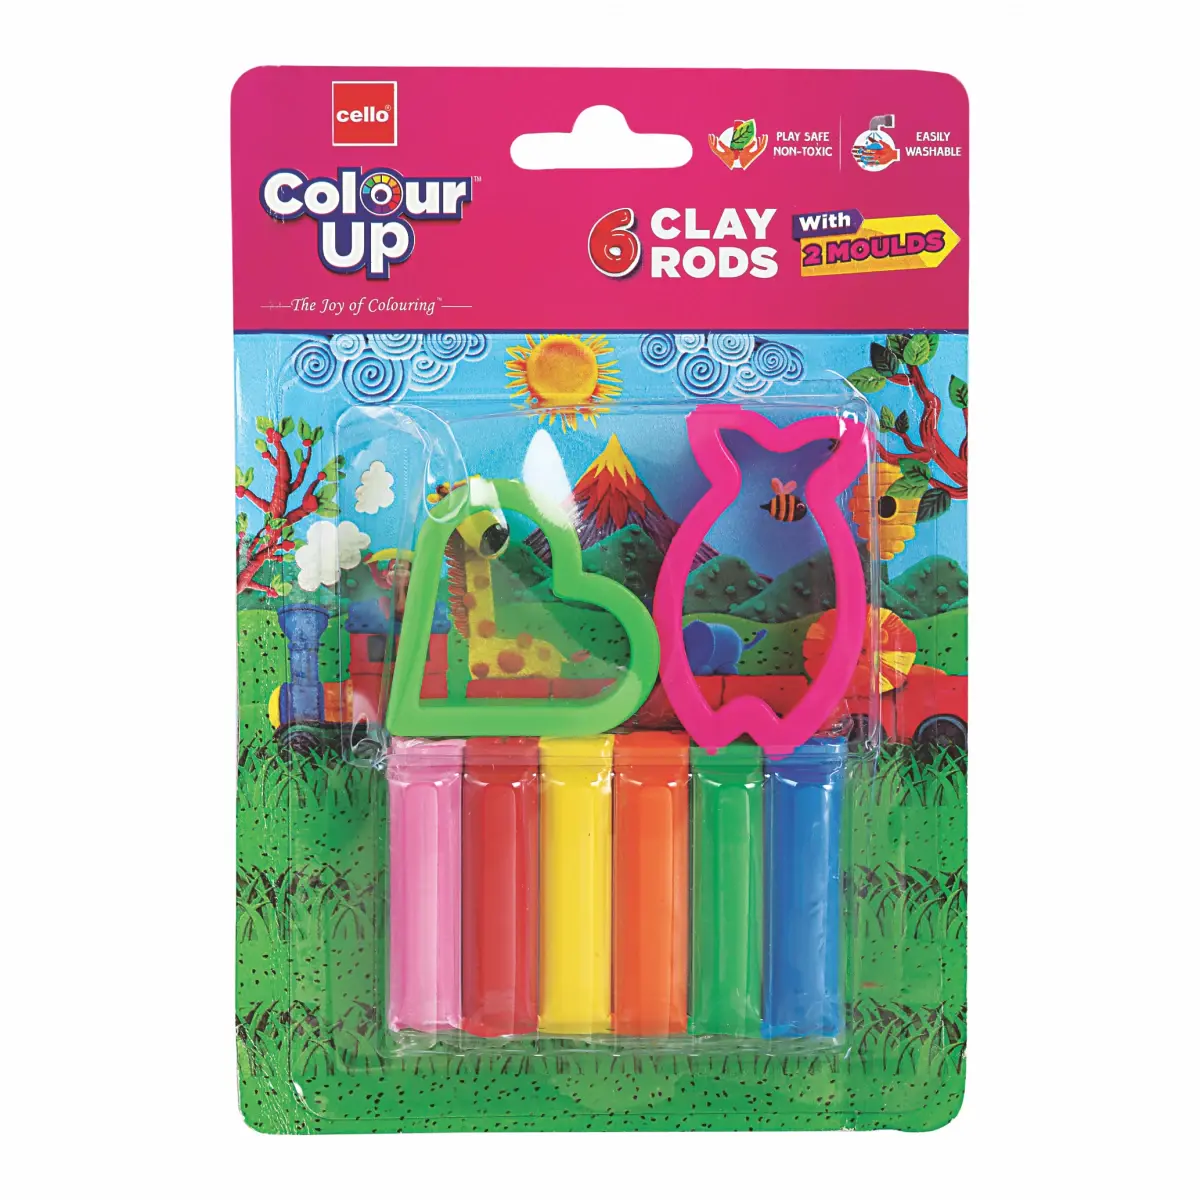 COLOURUP Colourup Clay, Play Dough Clay Set for Kids, 6 Rods, Multicolour, 4Y+